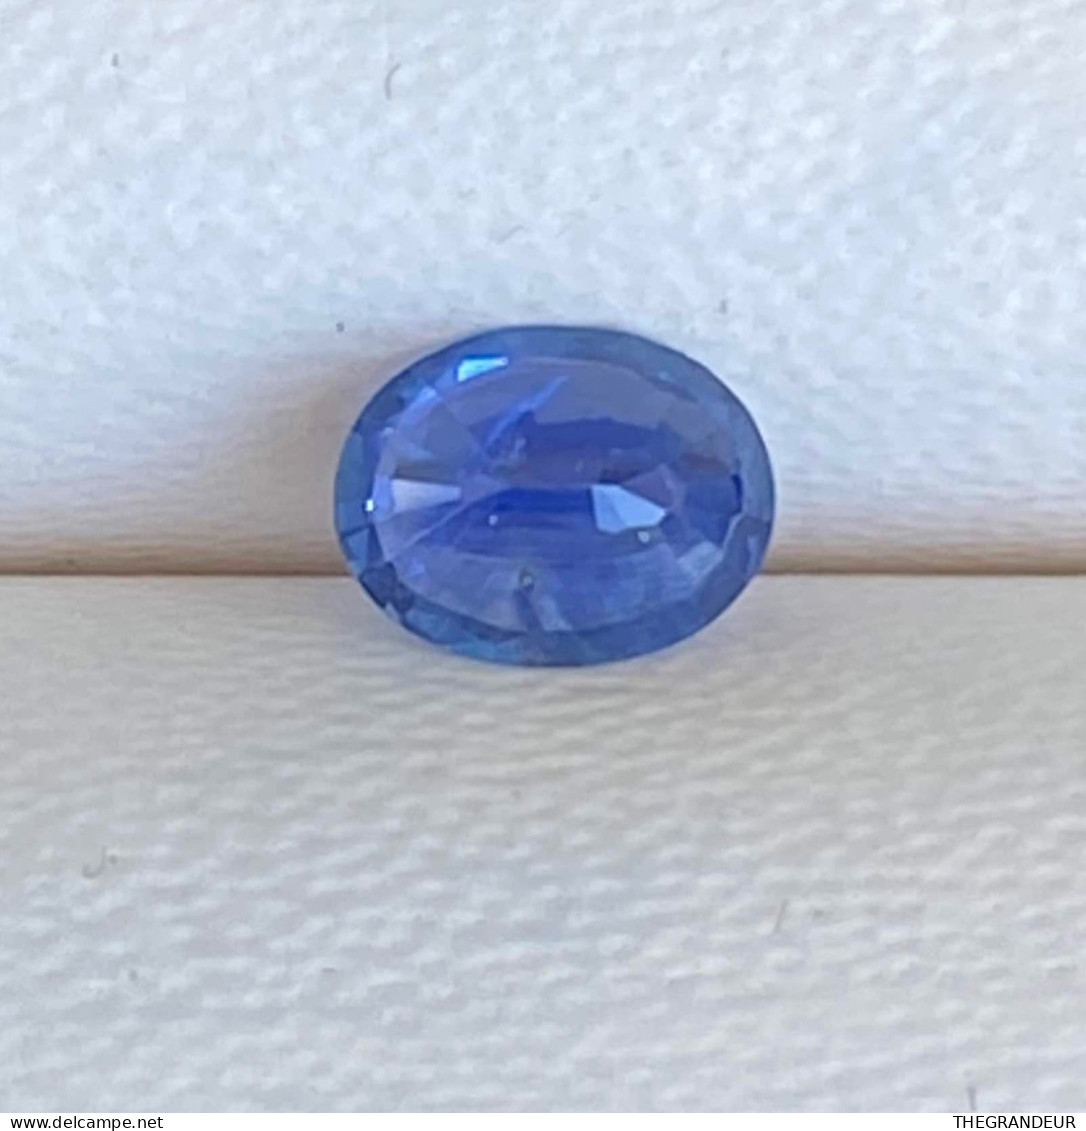 Natural Blue Sapphire Oval Cut 0.76 Carat From Sri Lanka - Sapphire